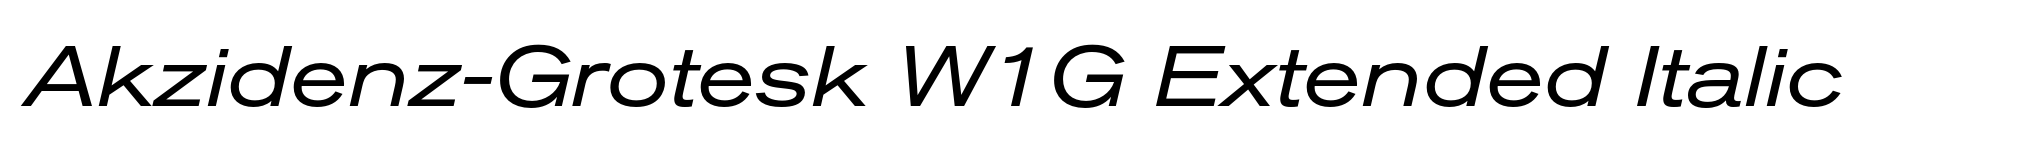 Akzidenz-Grotesk W1G Extended Italic image